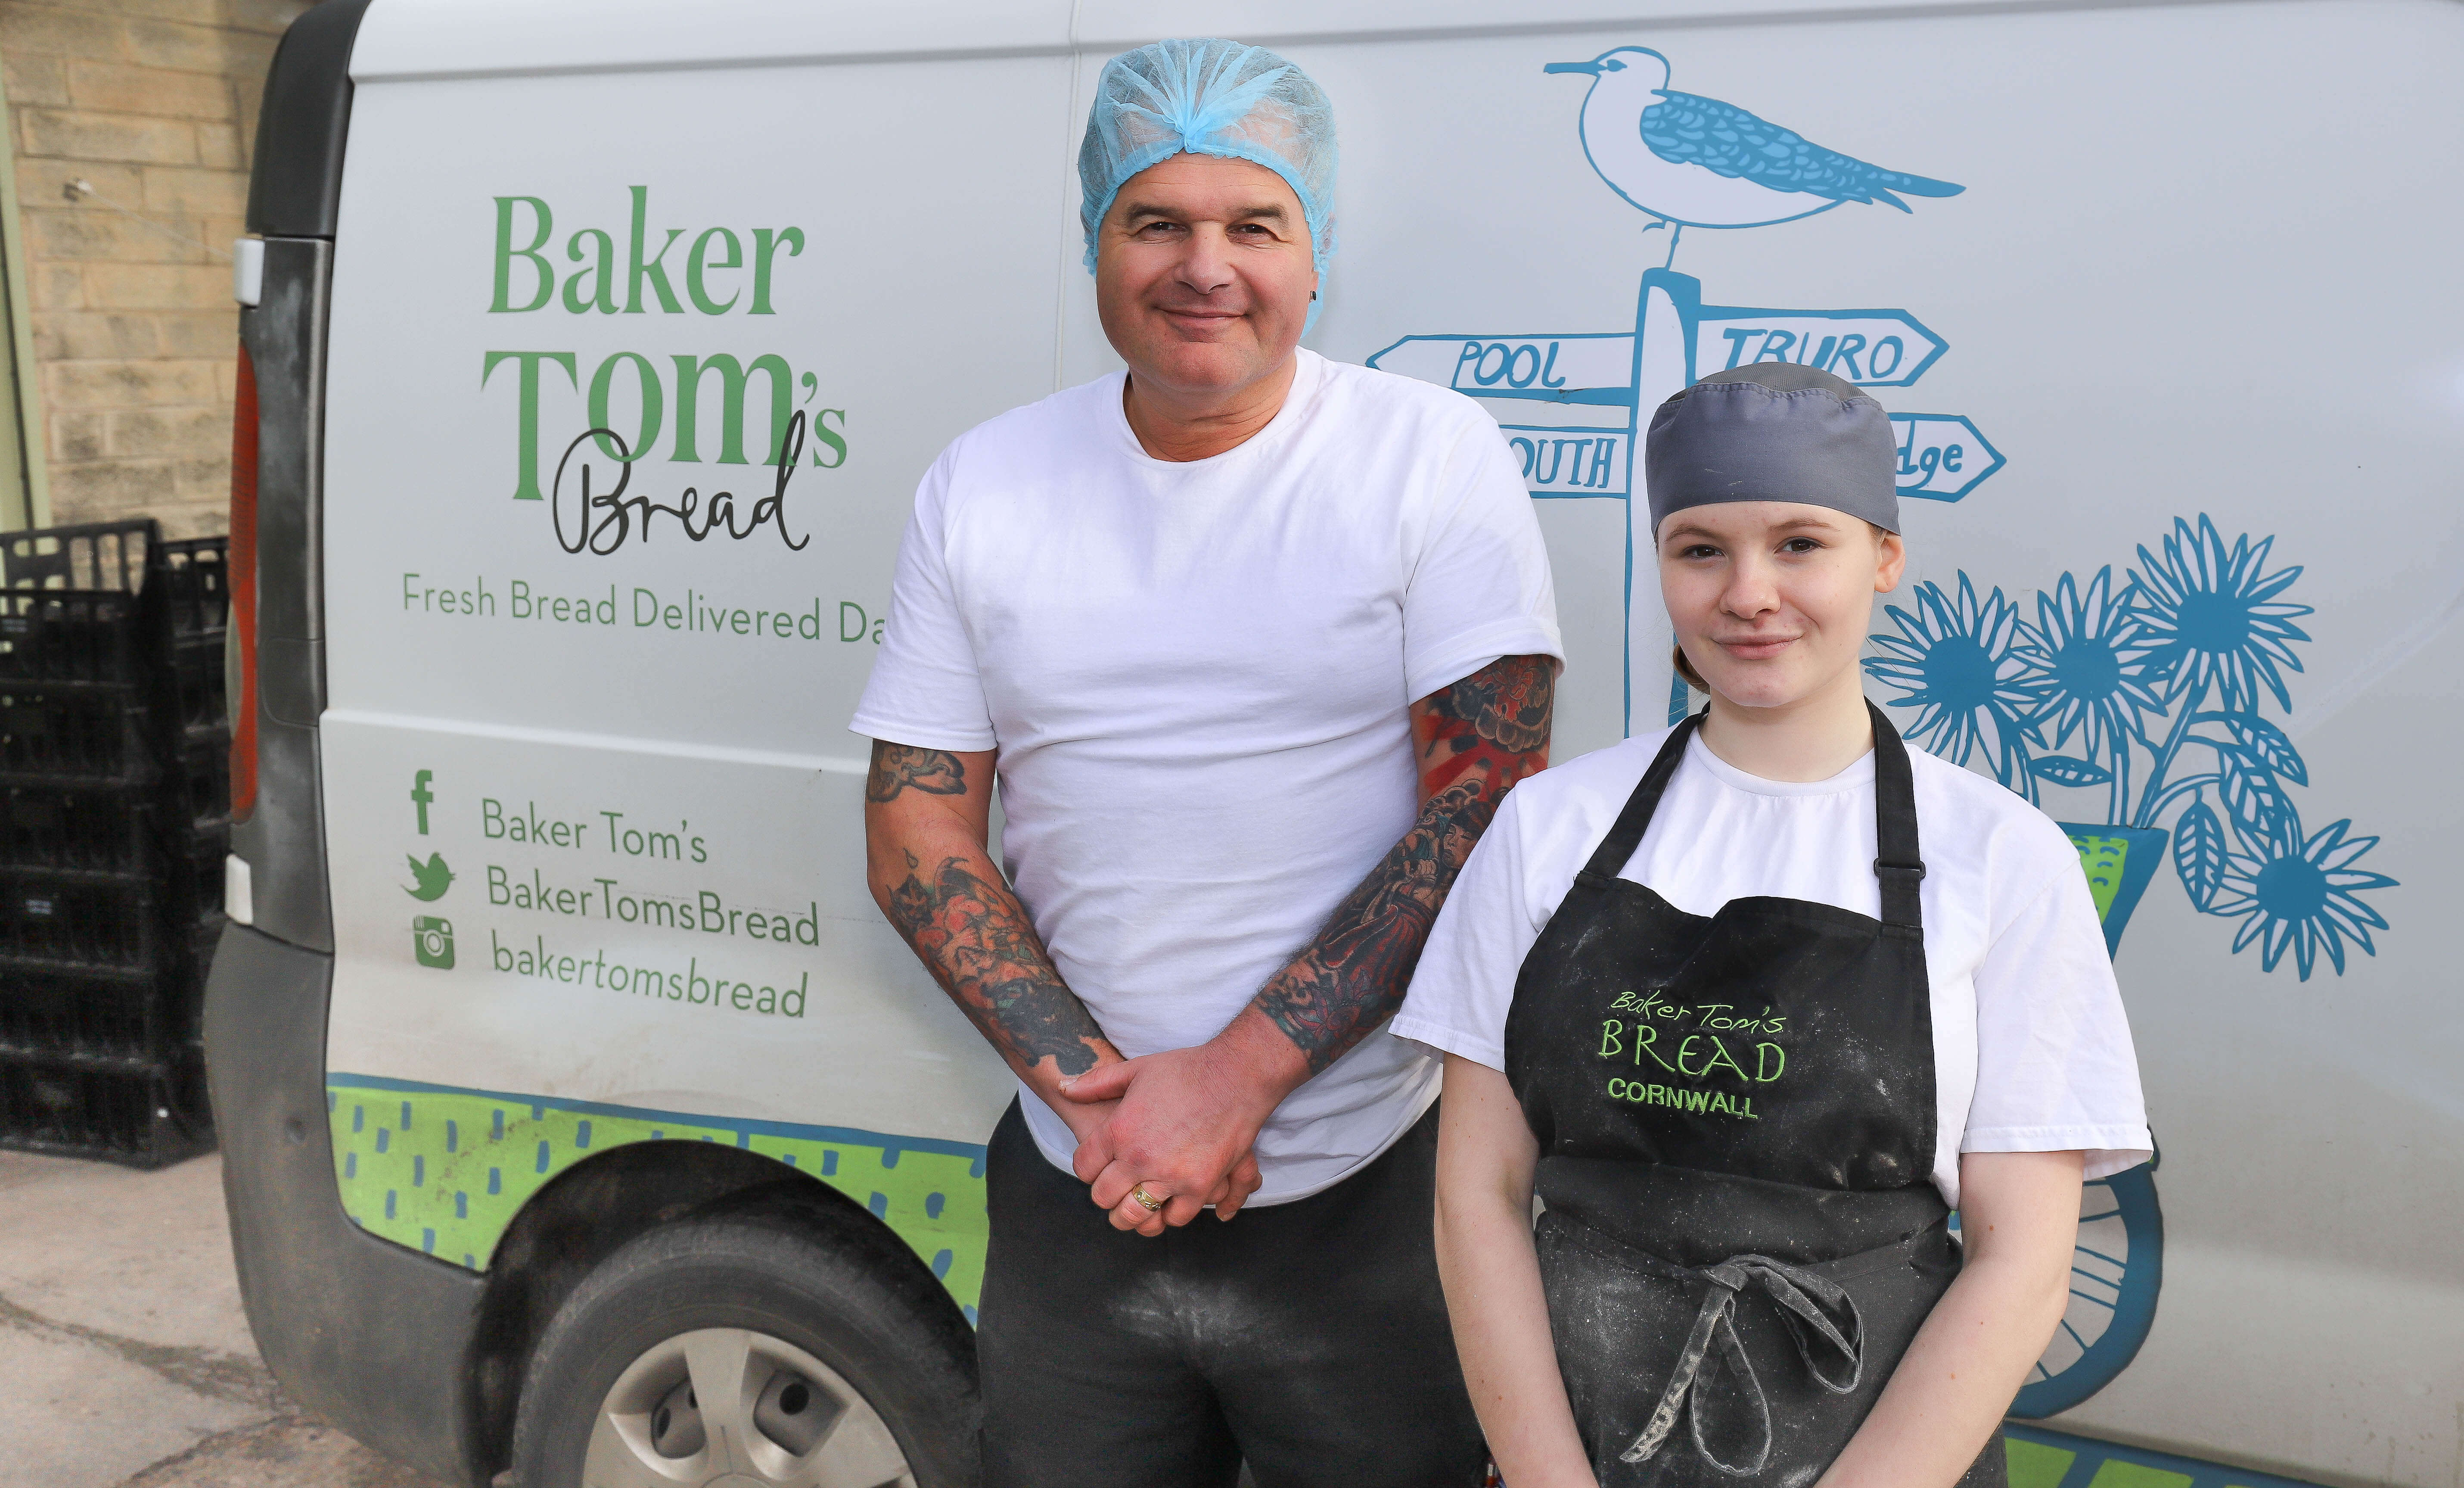 Two bakers stood against a Baker Toms van